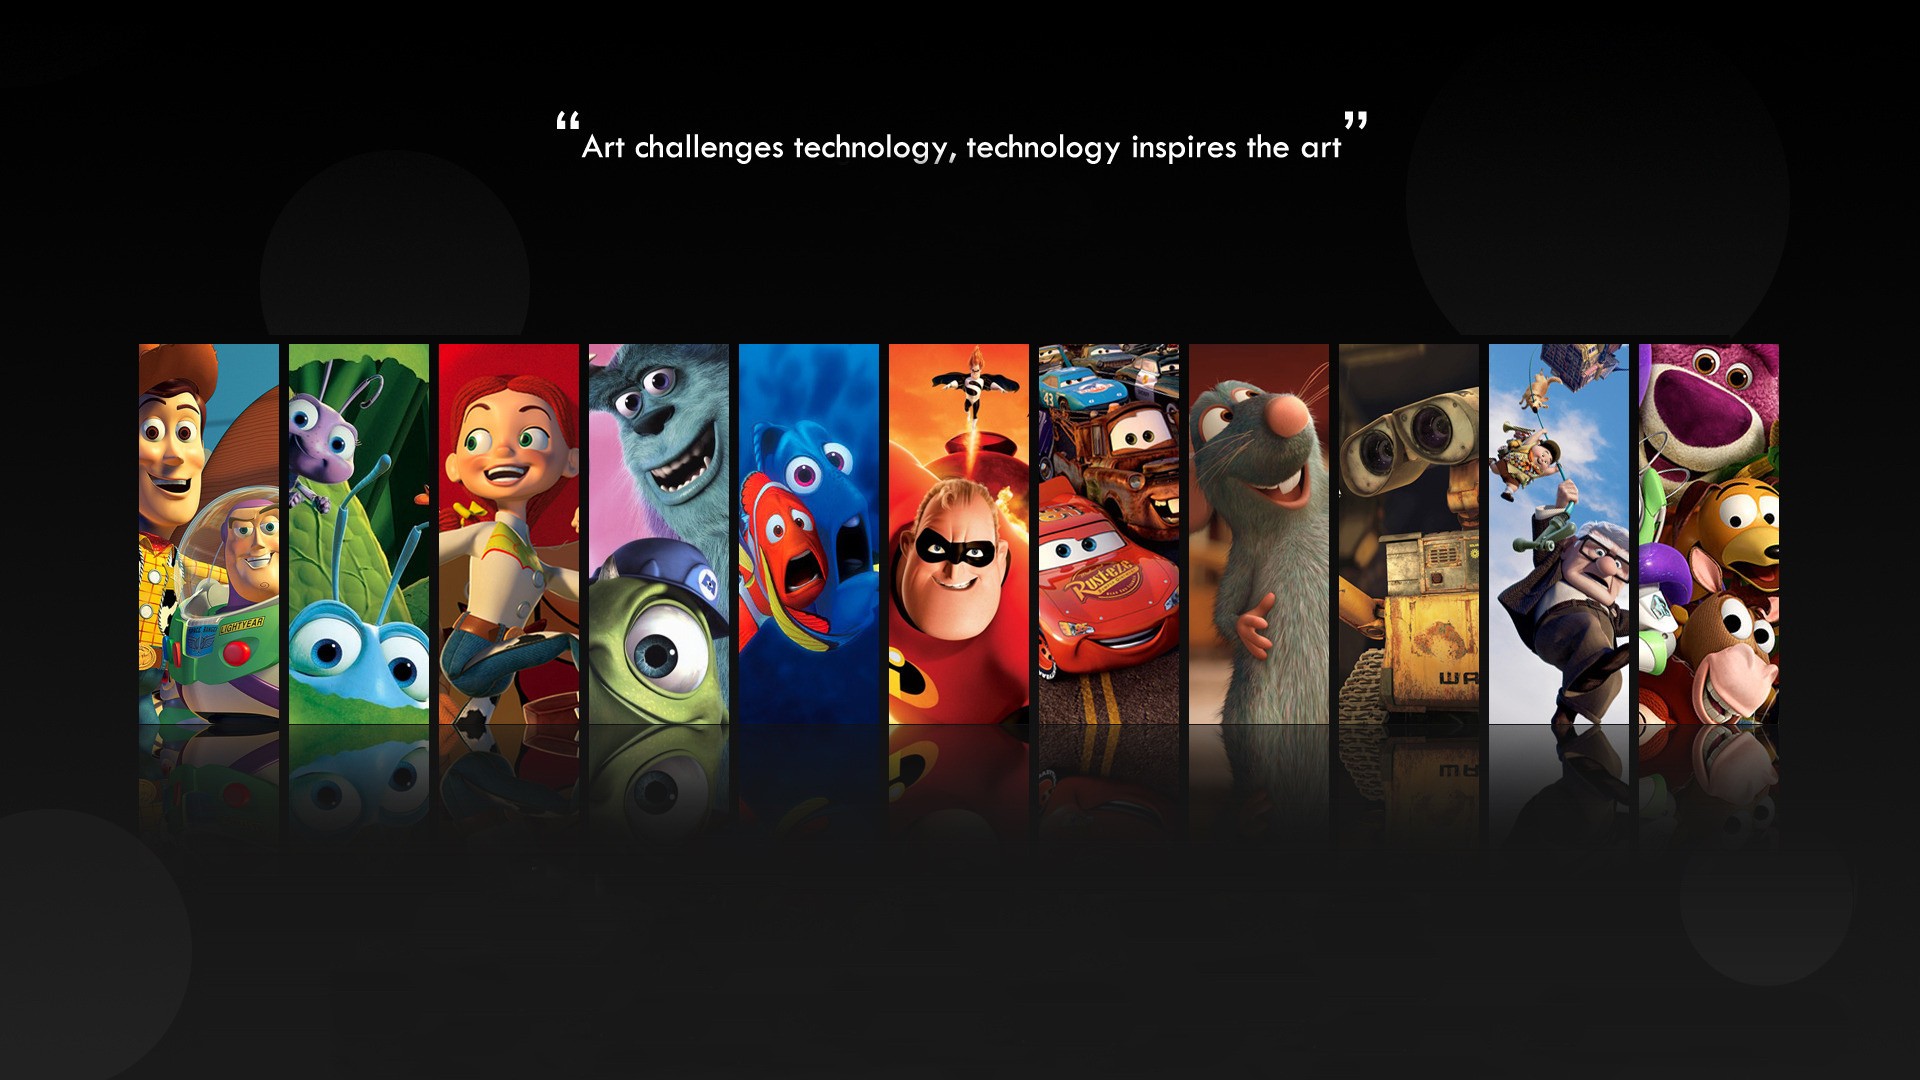 Disney Disney Pixar Movies Animated Movies Collage Pixar Animation Studios 1920x1080